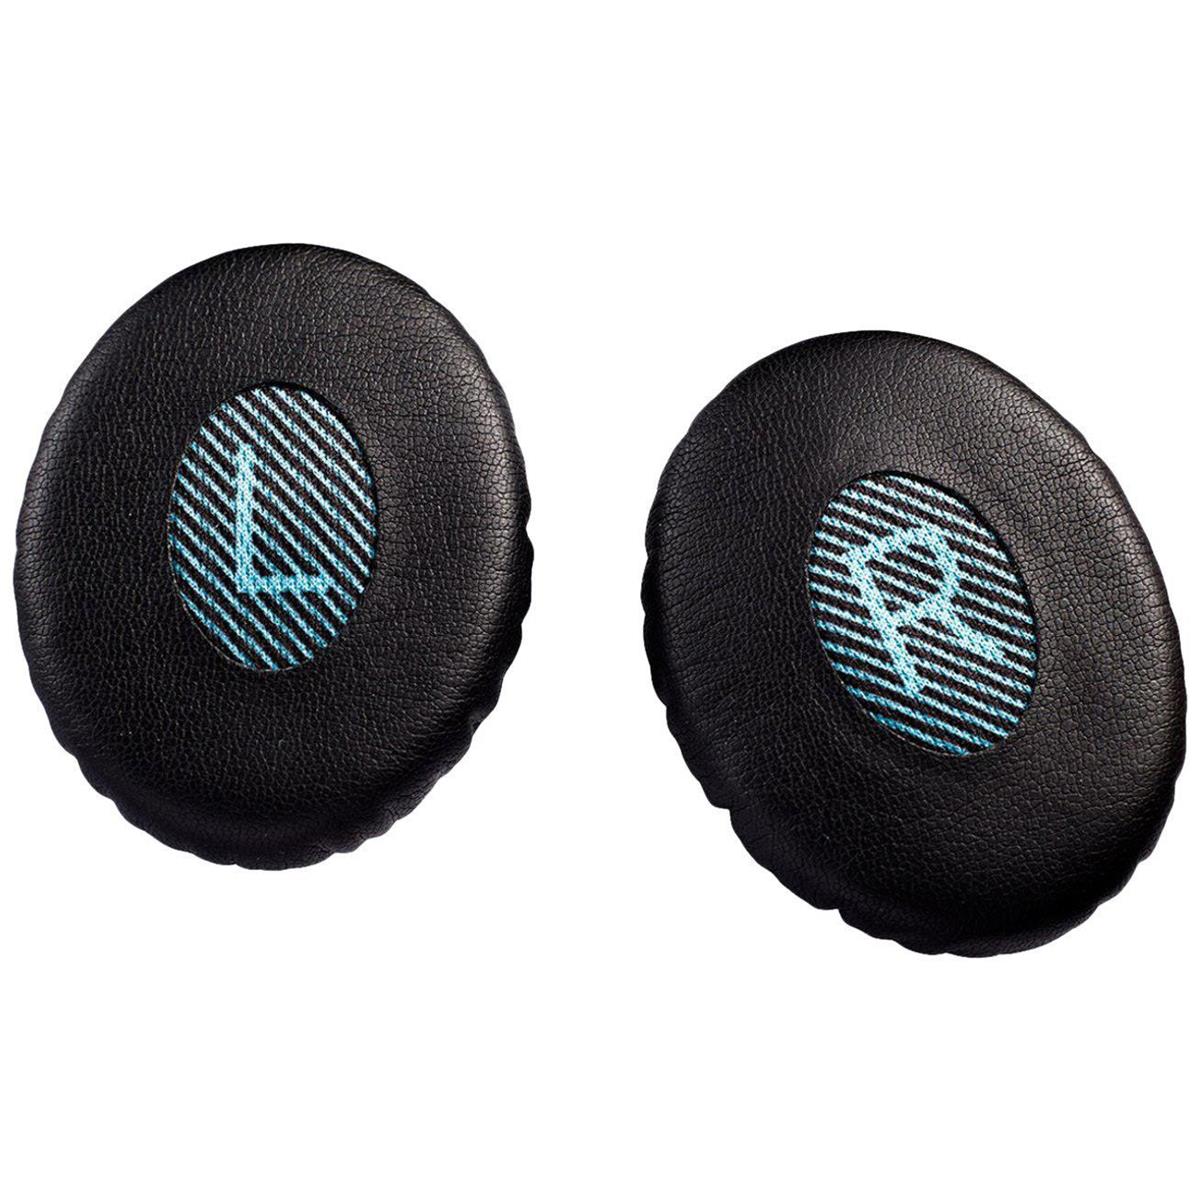 Image of Bose Sound Link On-Ear Bluetooth Headphones Ear Cushion Kit